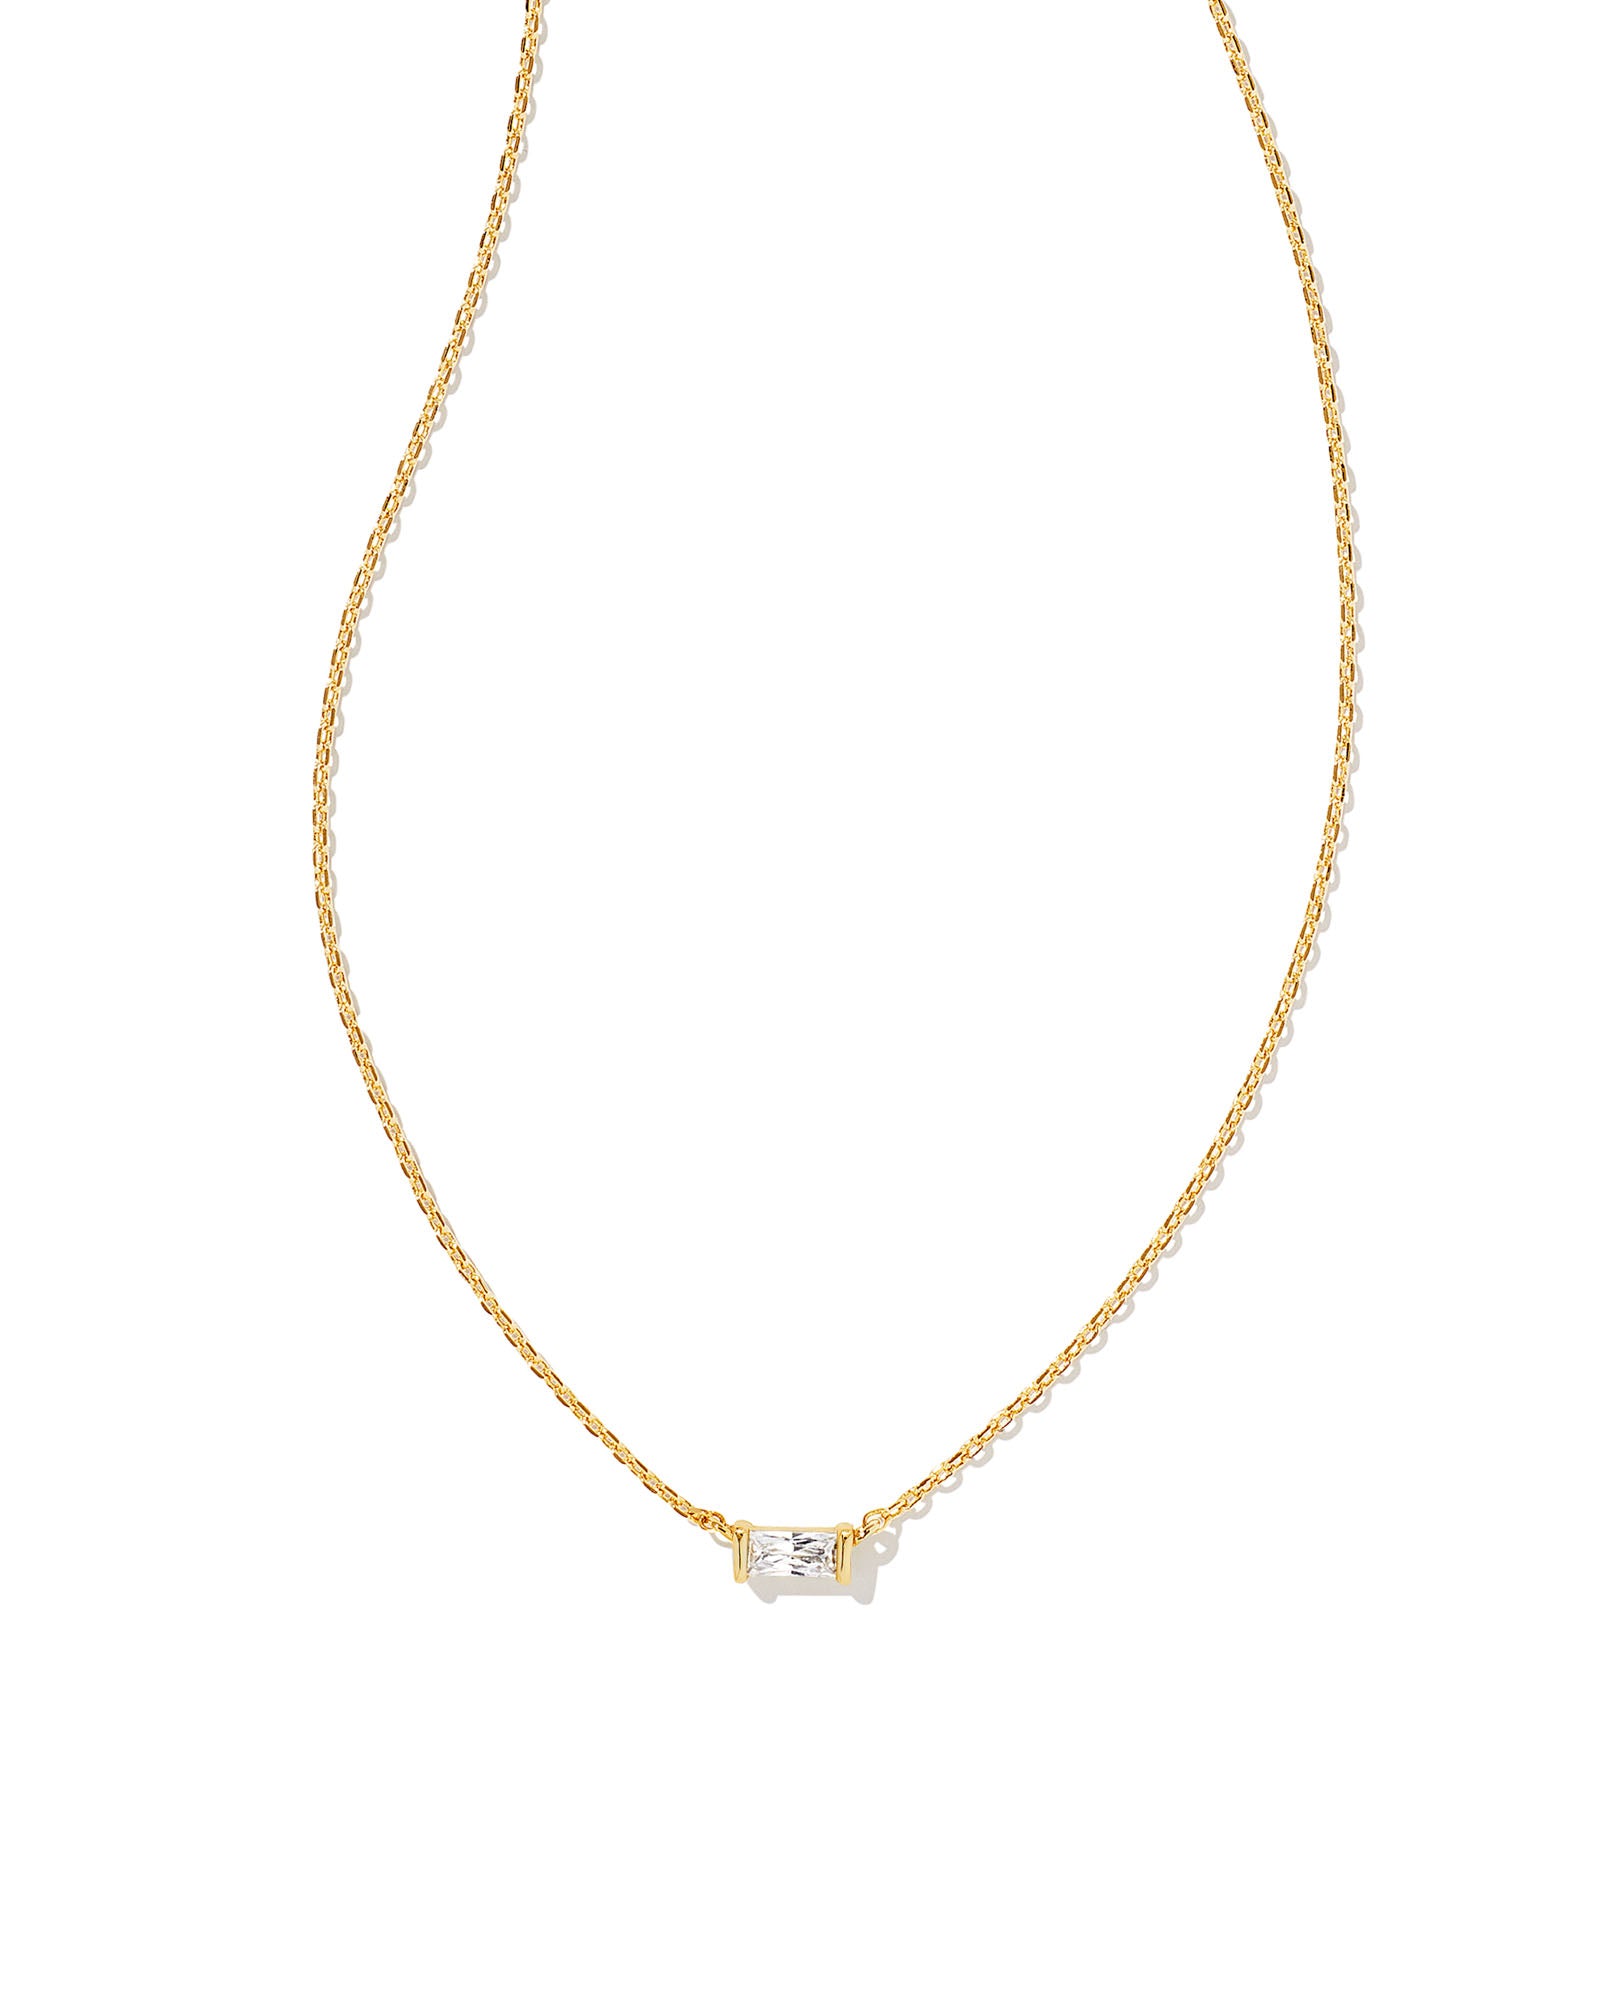 Kendra Scott Juliette Gold Pendant Necklace in White Crystal